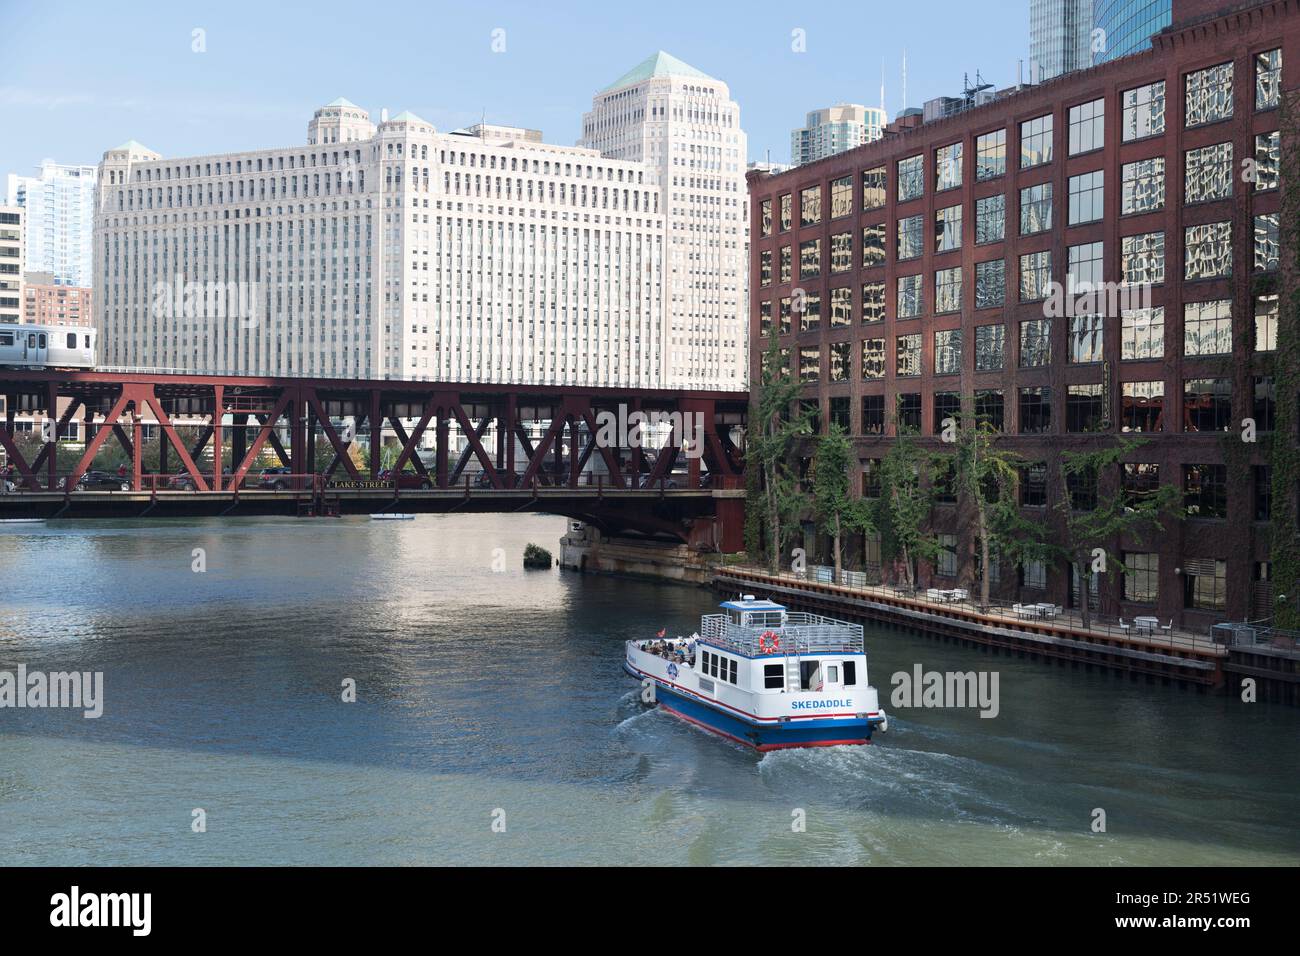 USA, Illinois, Chicago, Touristenboot Merchandise Mart Gebäude im Hintergrund. Stockfoto